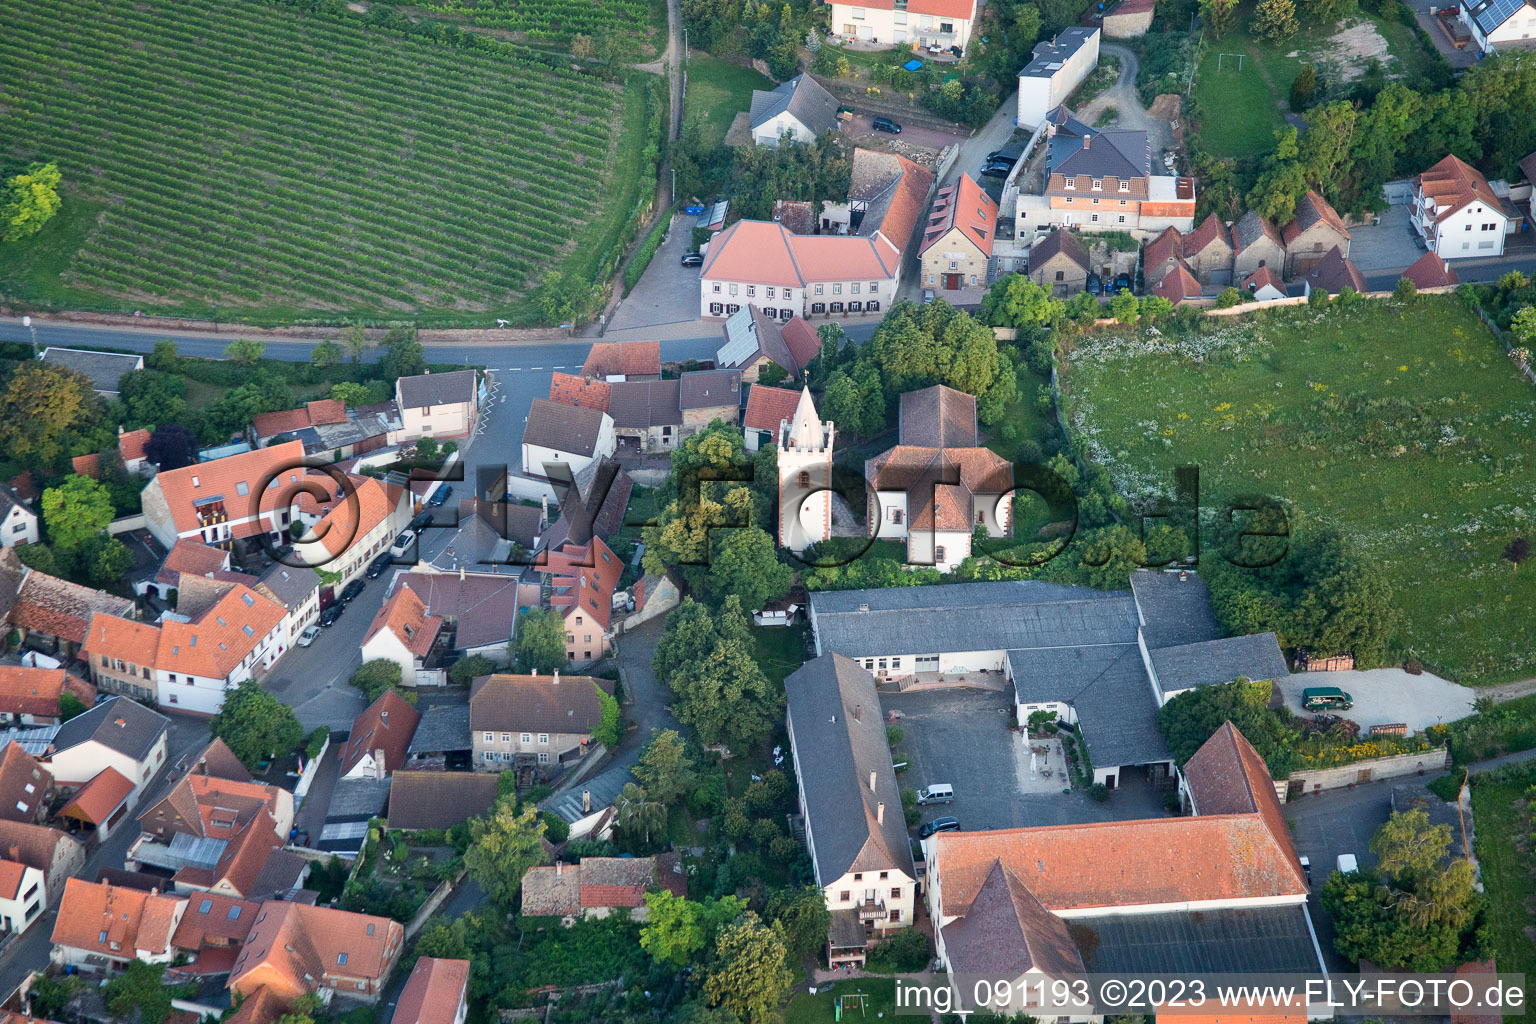 Aerial photograpy of Bockenheim an der Weinstraße in the state Rhineland-Palatinate, Germany